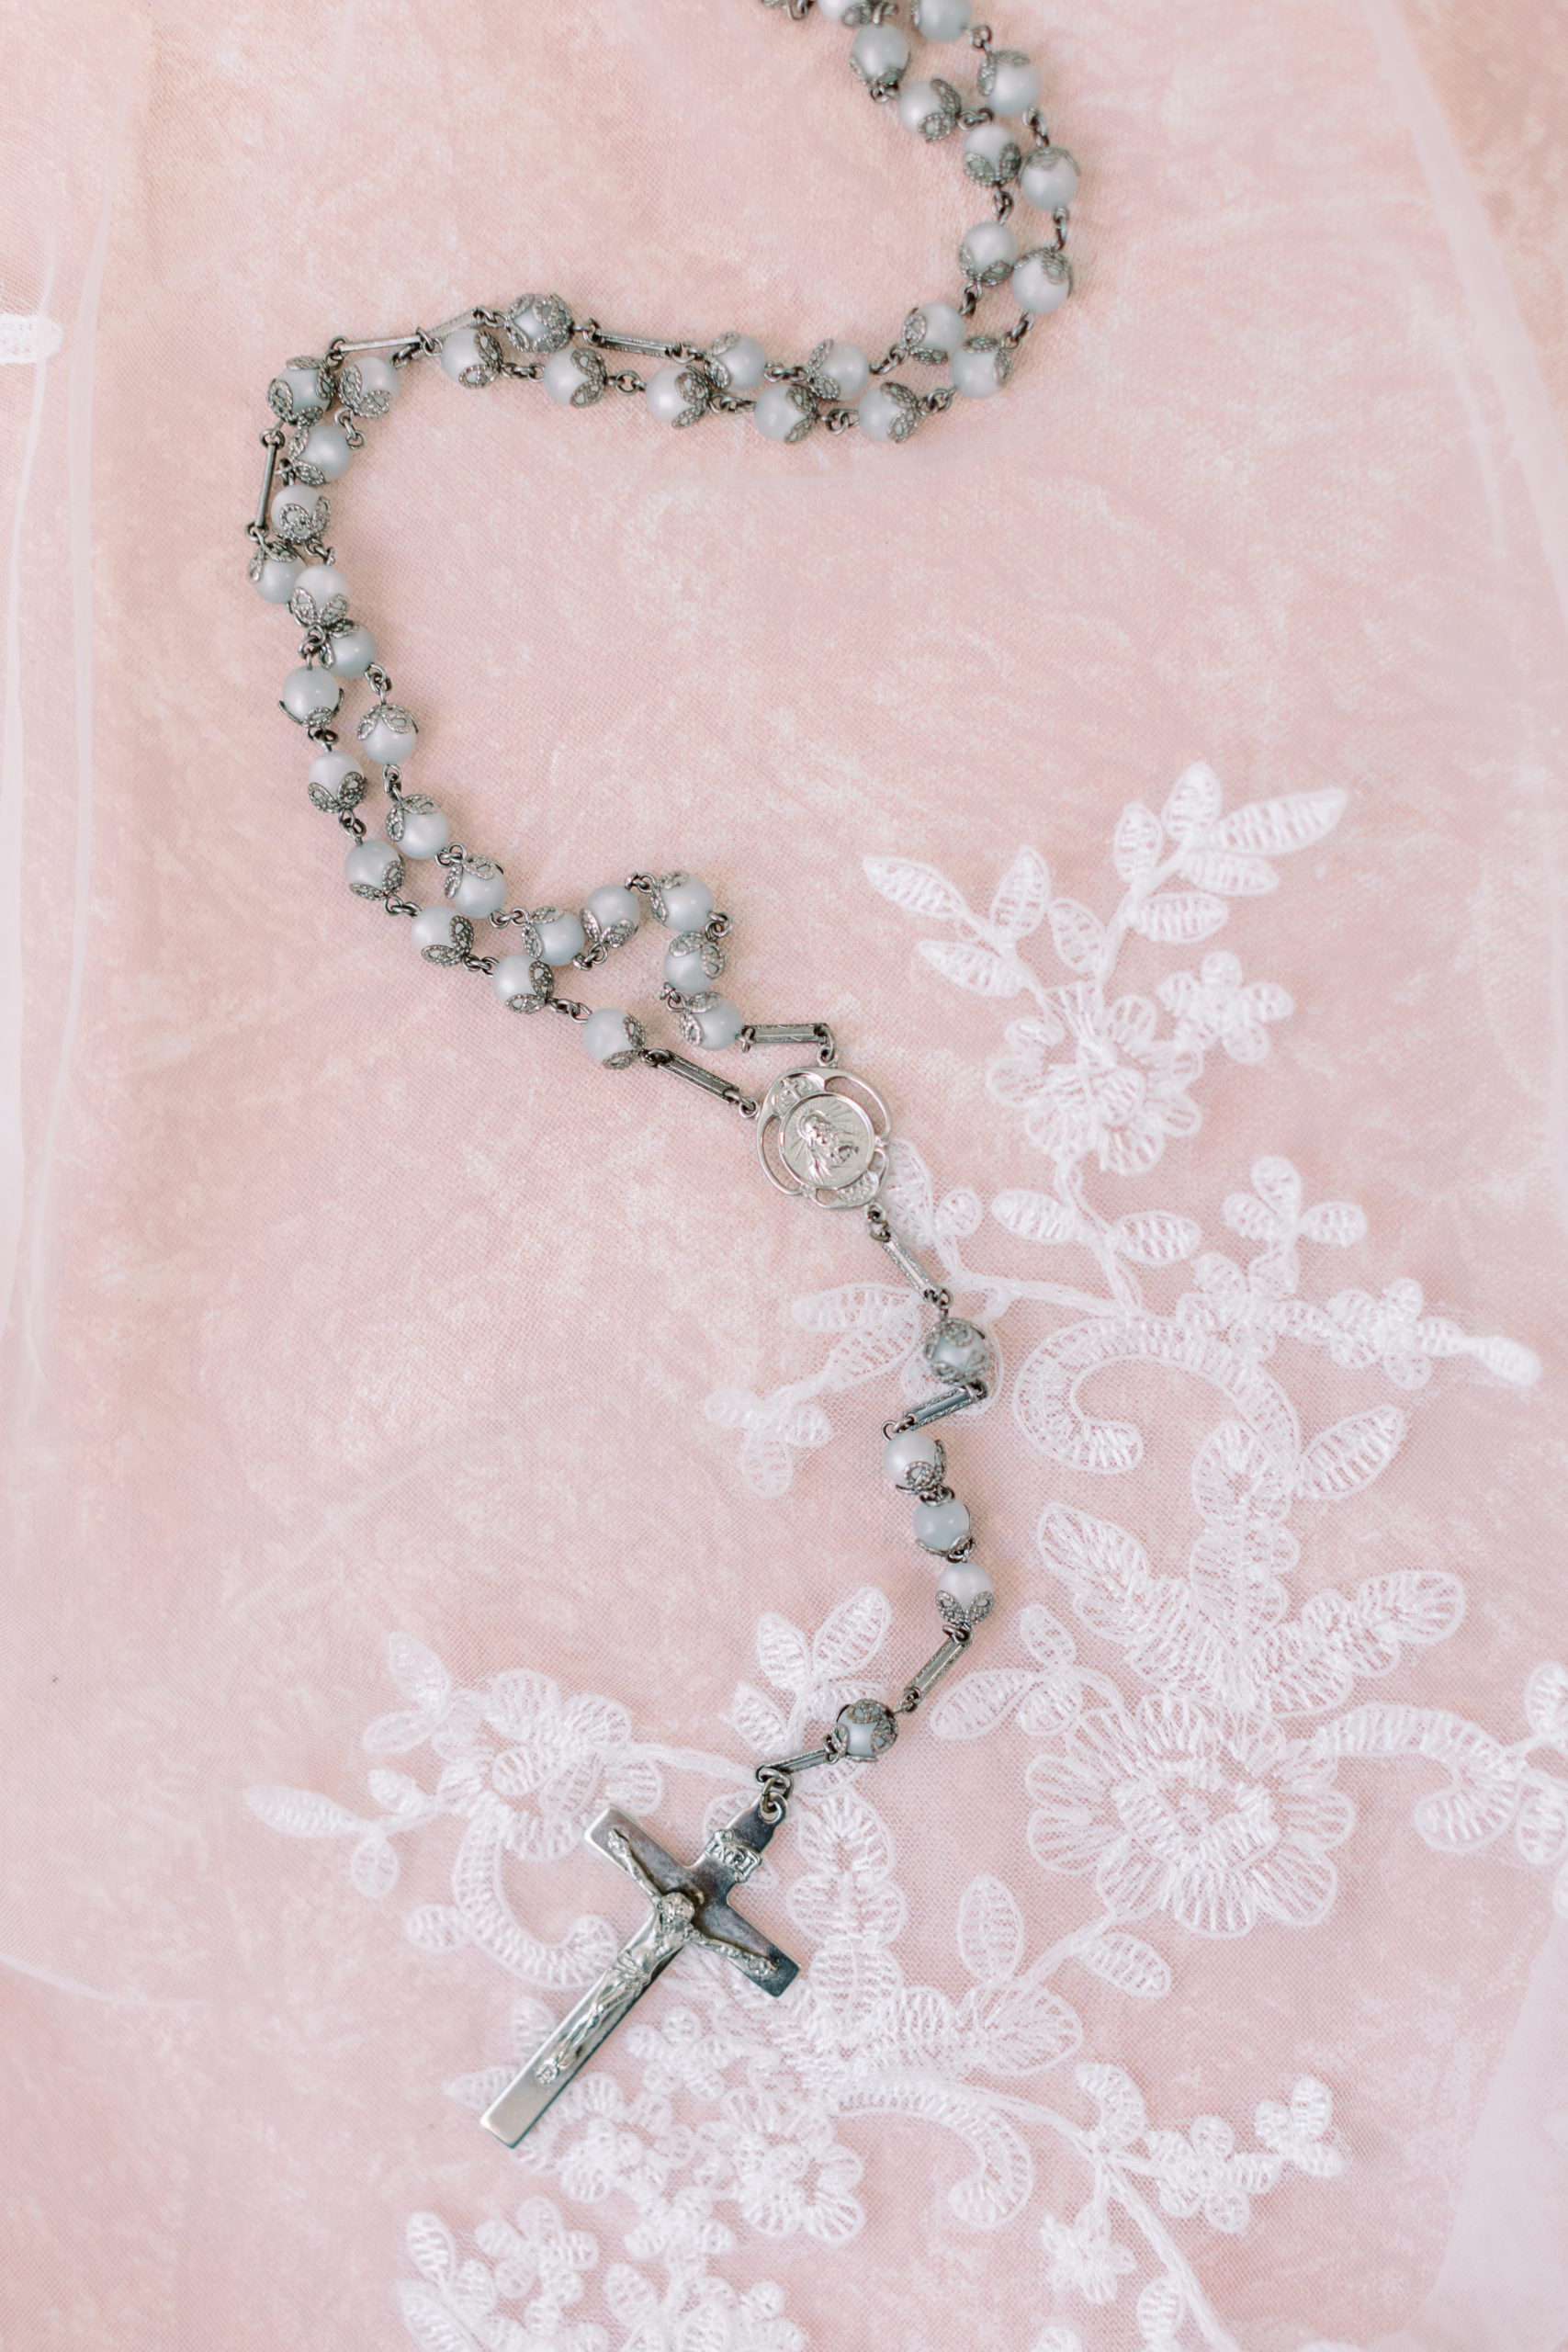 A-Catholic-Brides-Wedding-Day-Rosary-